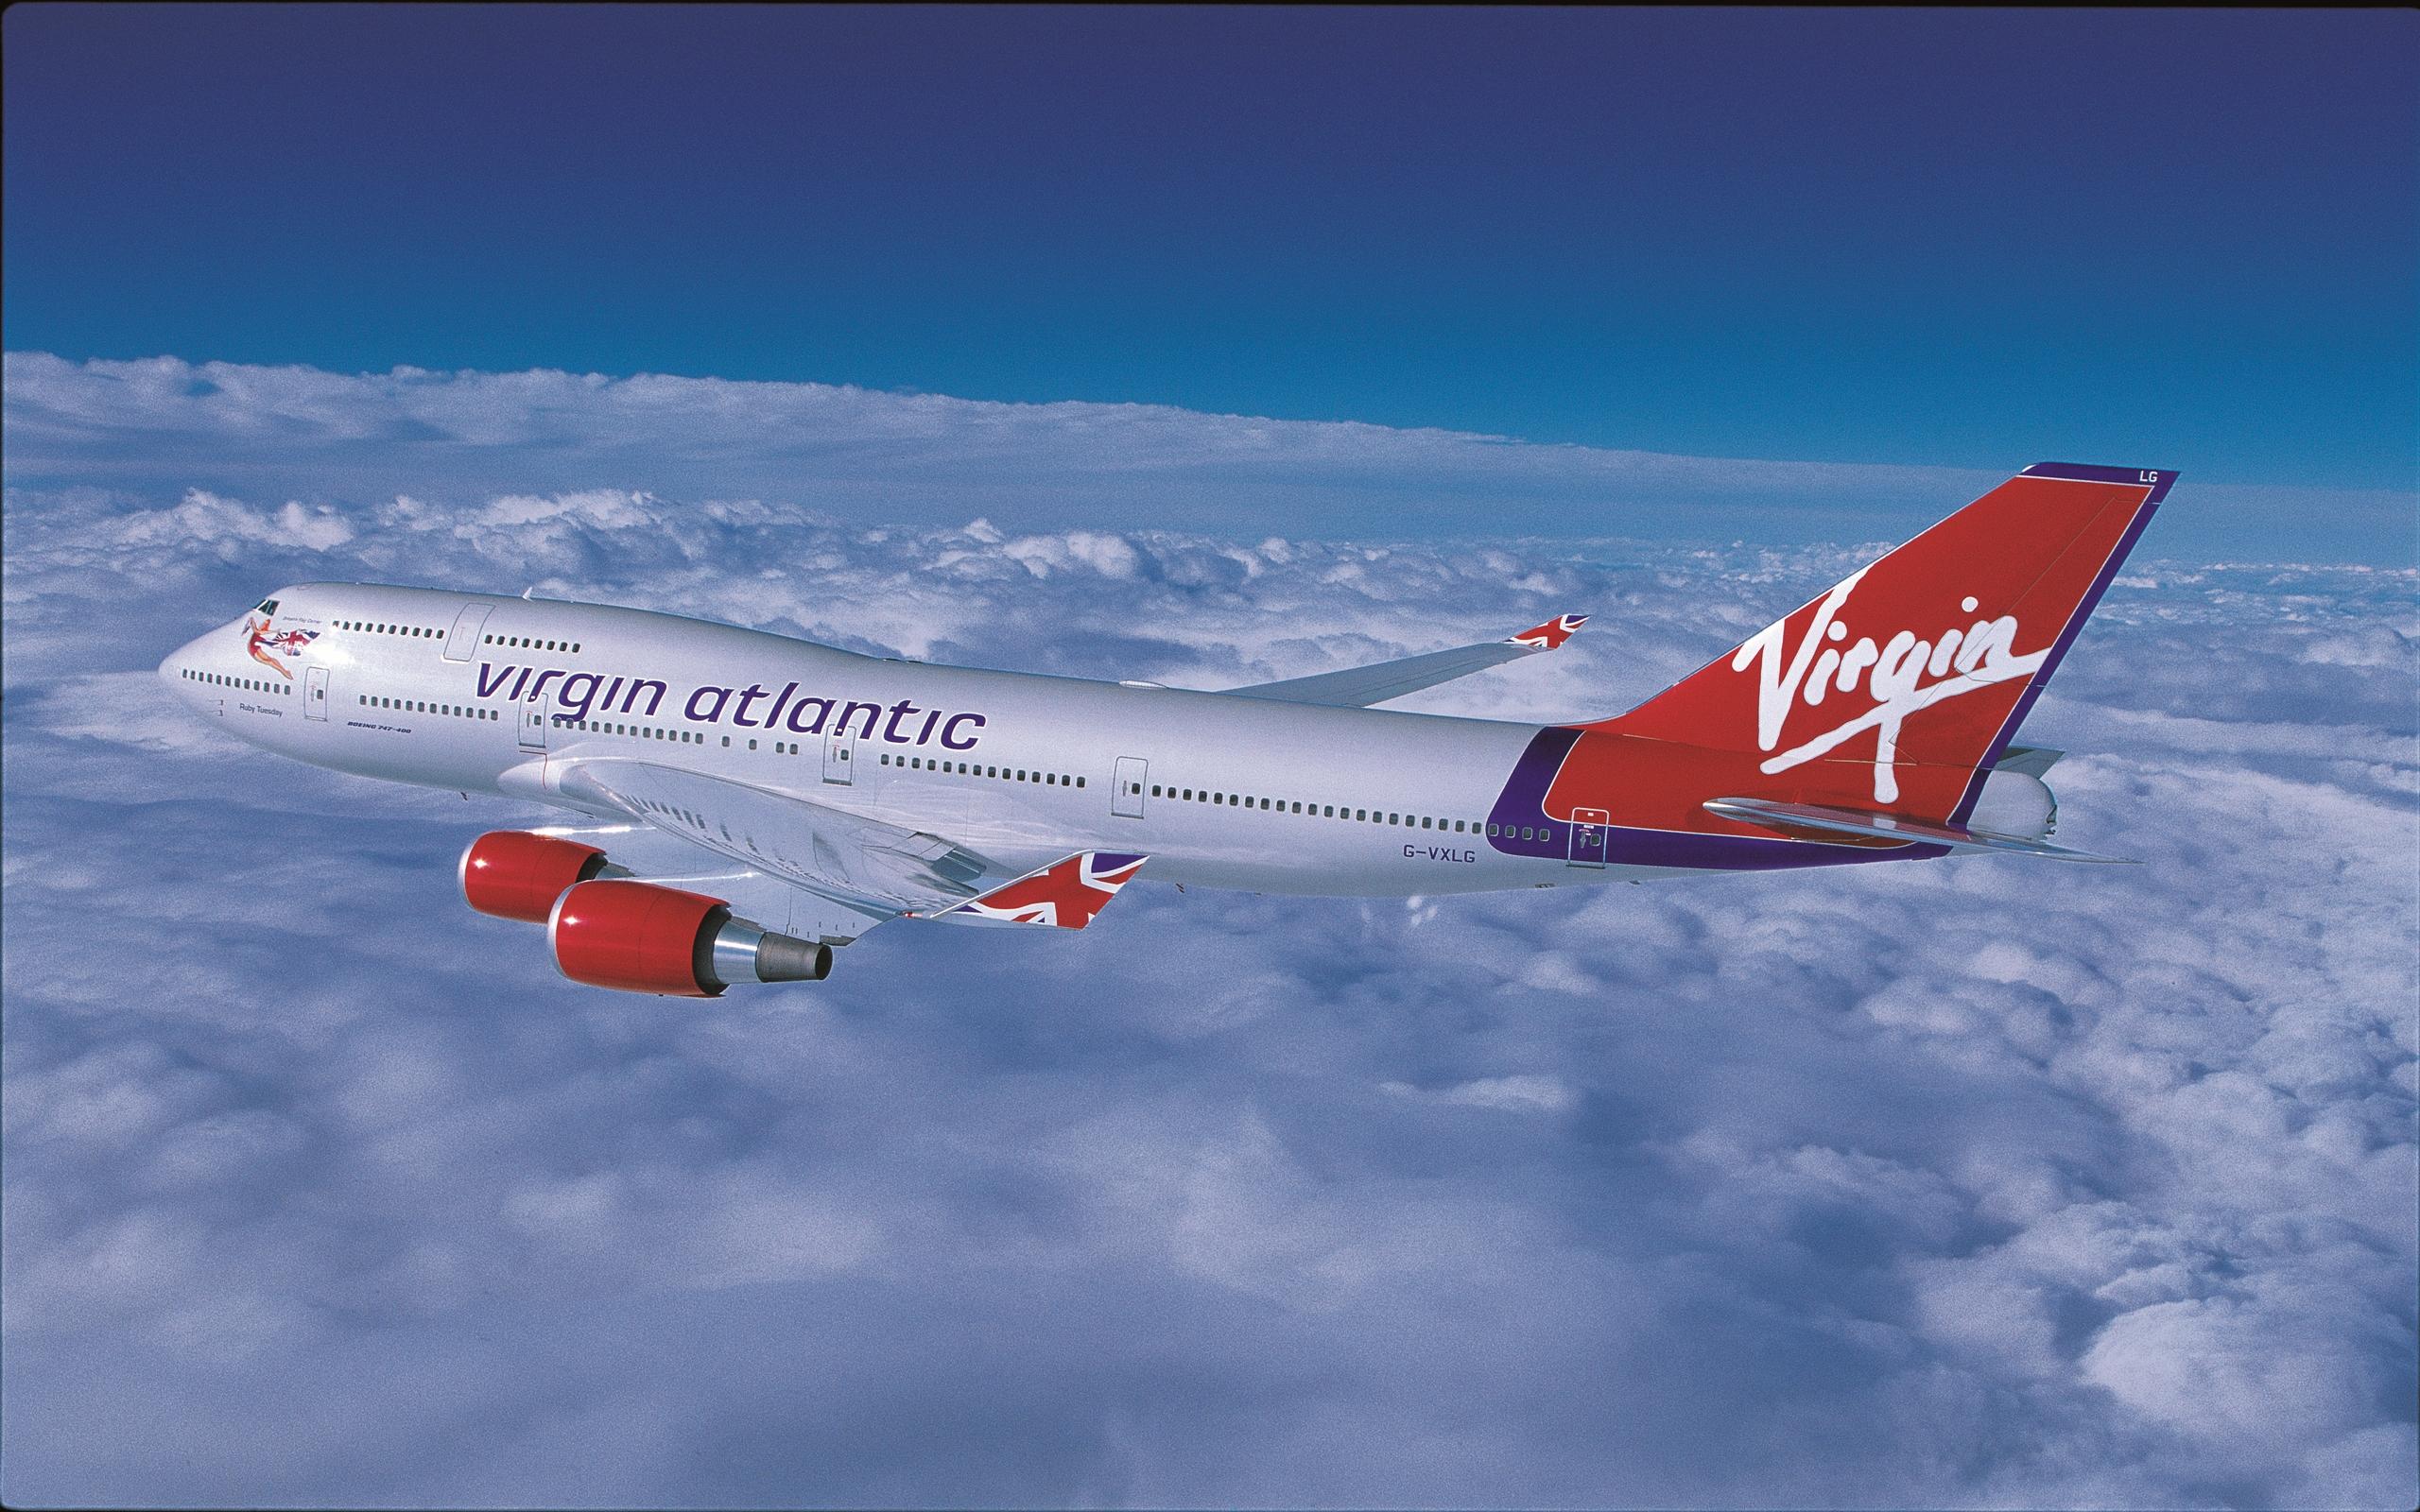 Virgin Atlantic Picture Library, Wallpaper13.com